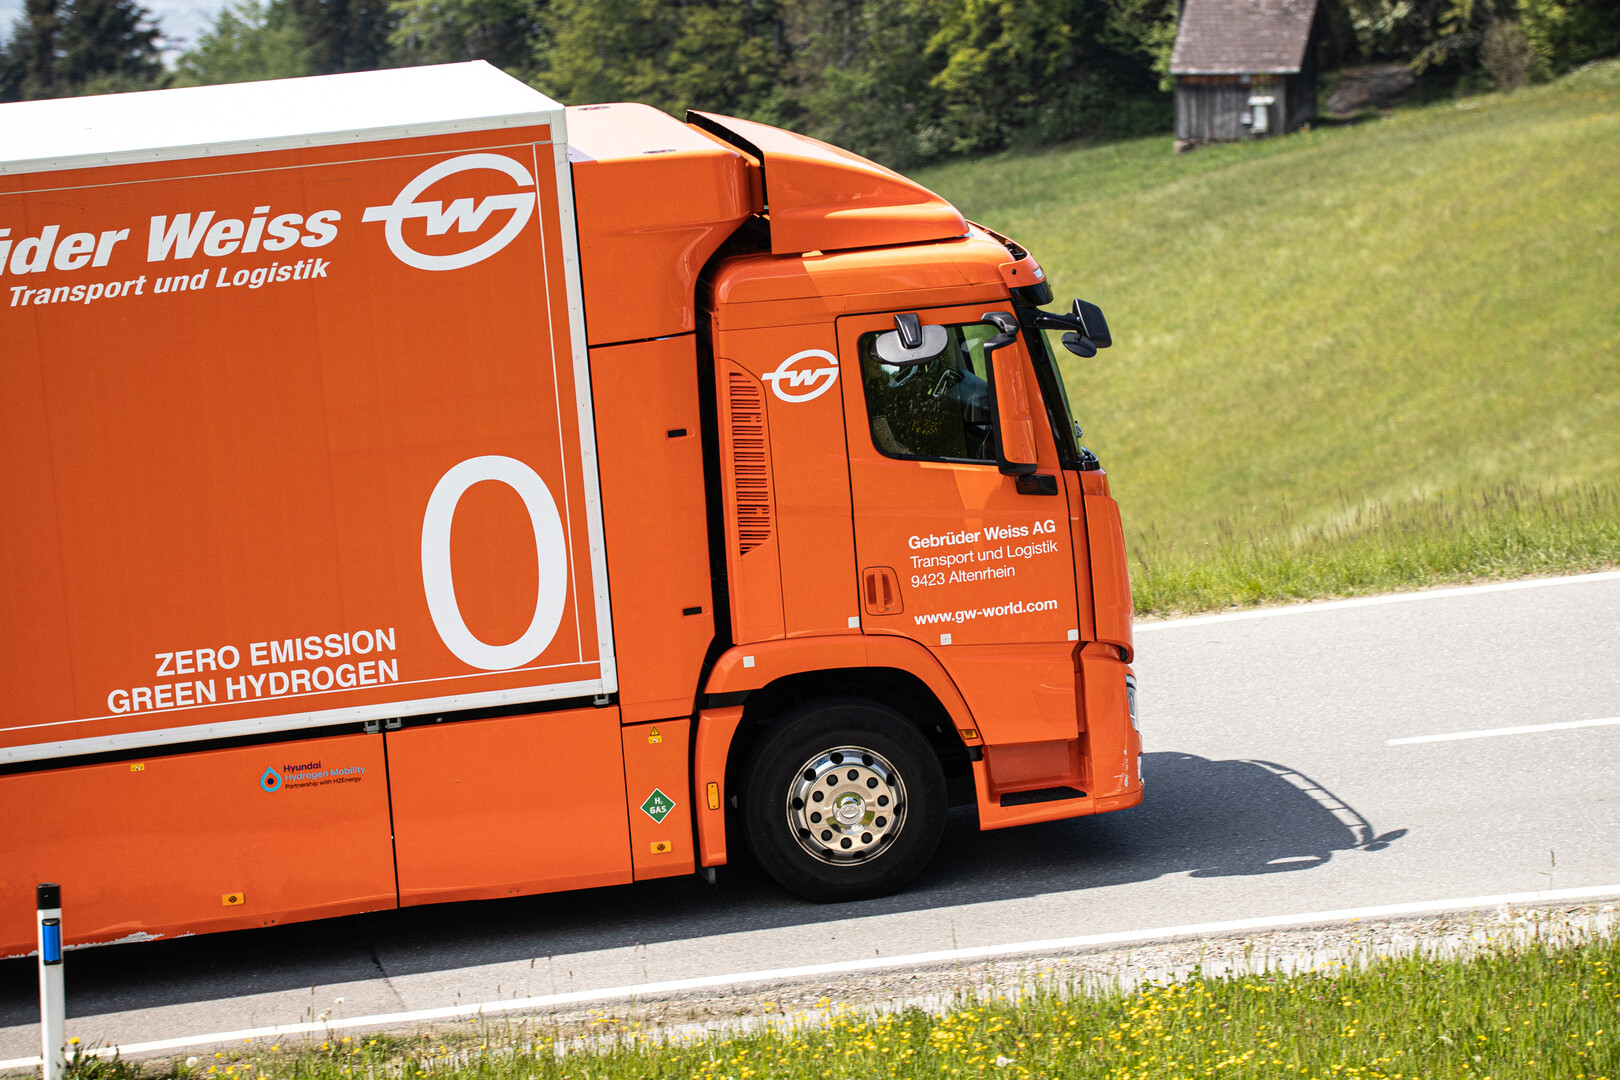 Gebrüder Weiss Tests Hydrogen-powered Truck in Hungary